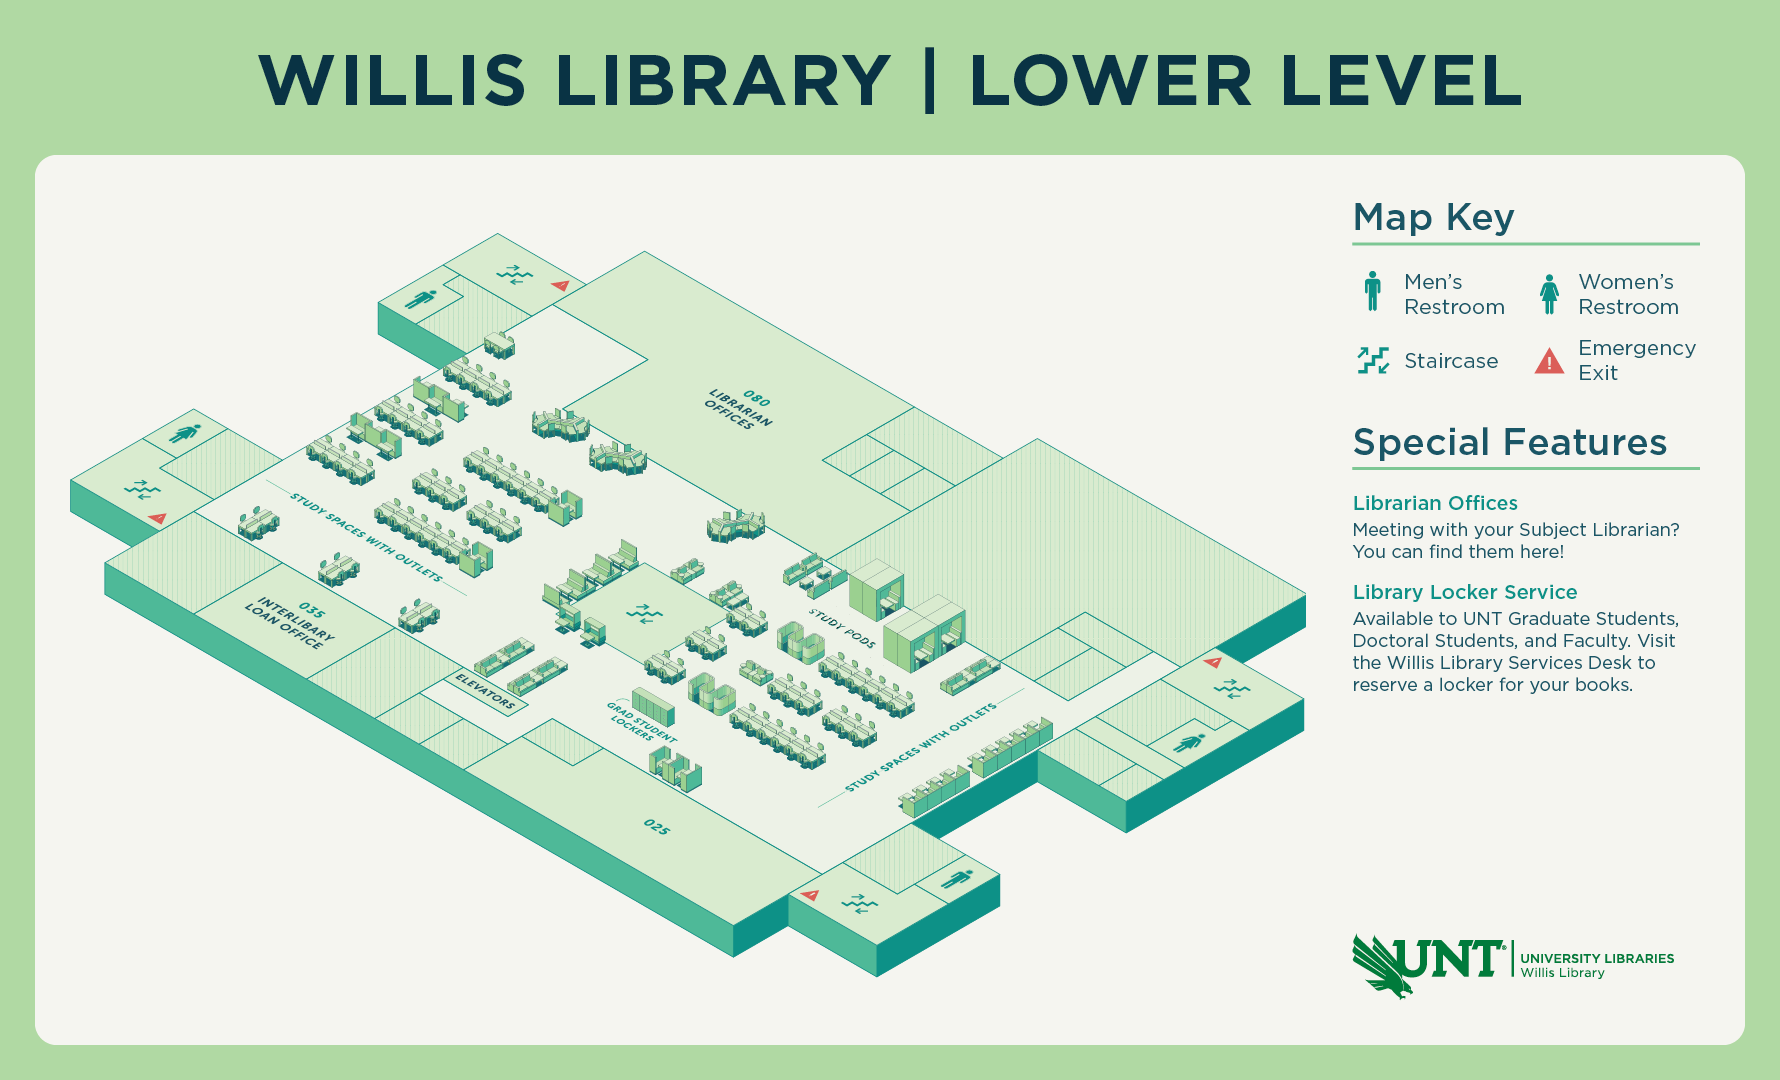 Lower Level (Basement) Floor Map of Willis Library